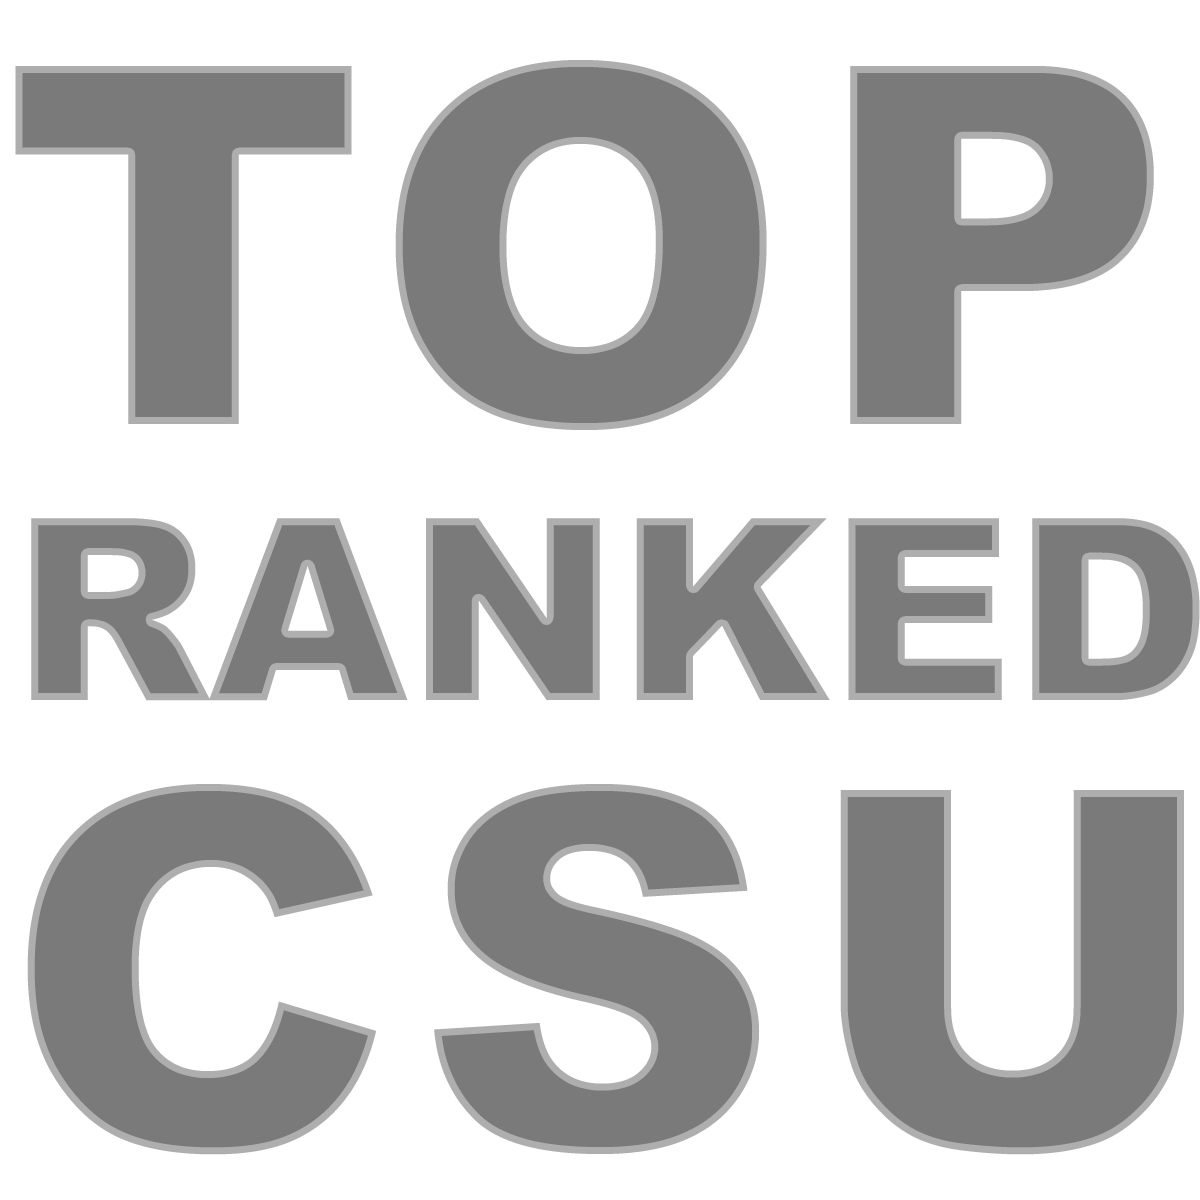 Top Ranked CSU